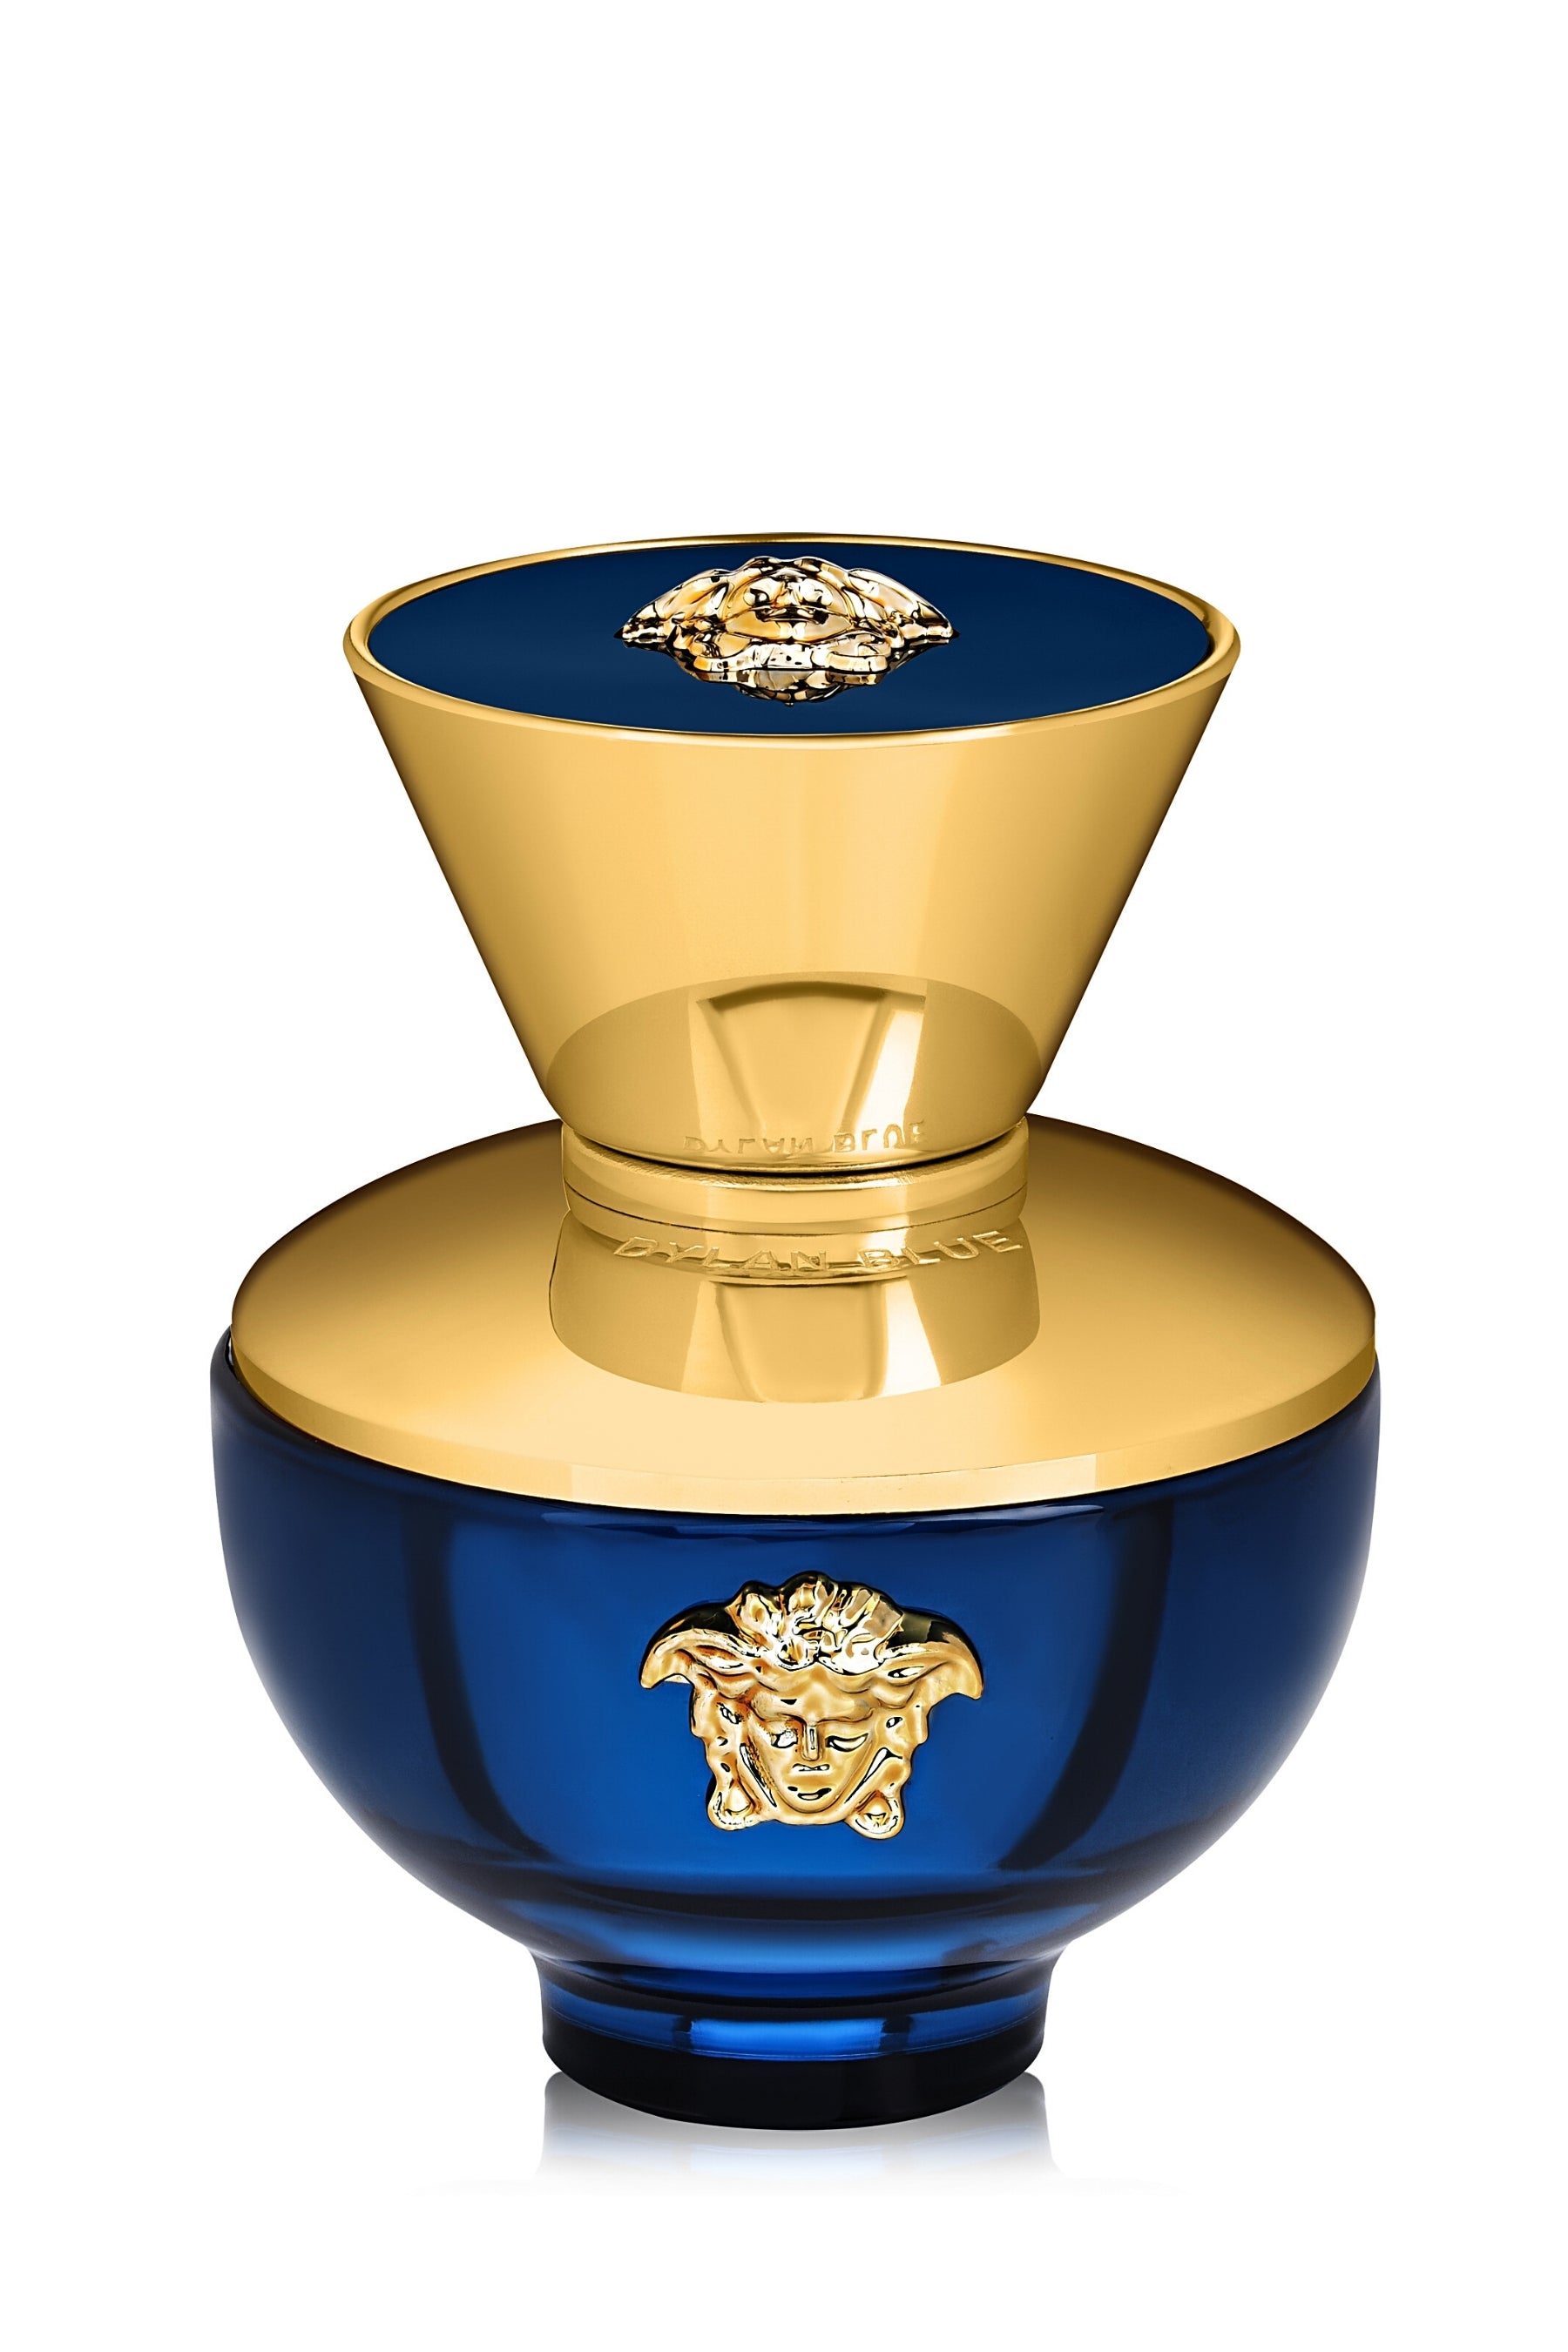 VERSACE Dylan Blue Gift Set For Women - Eau De Parfum - 100 ml